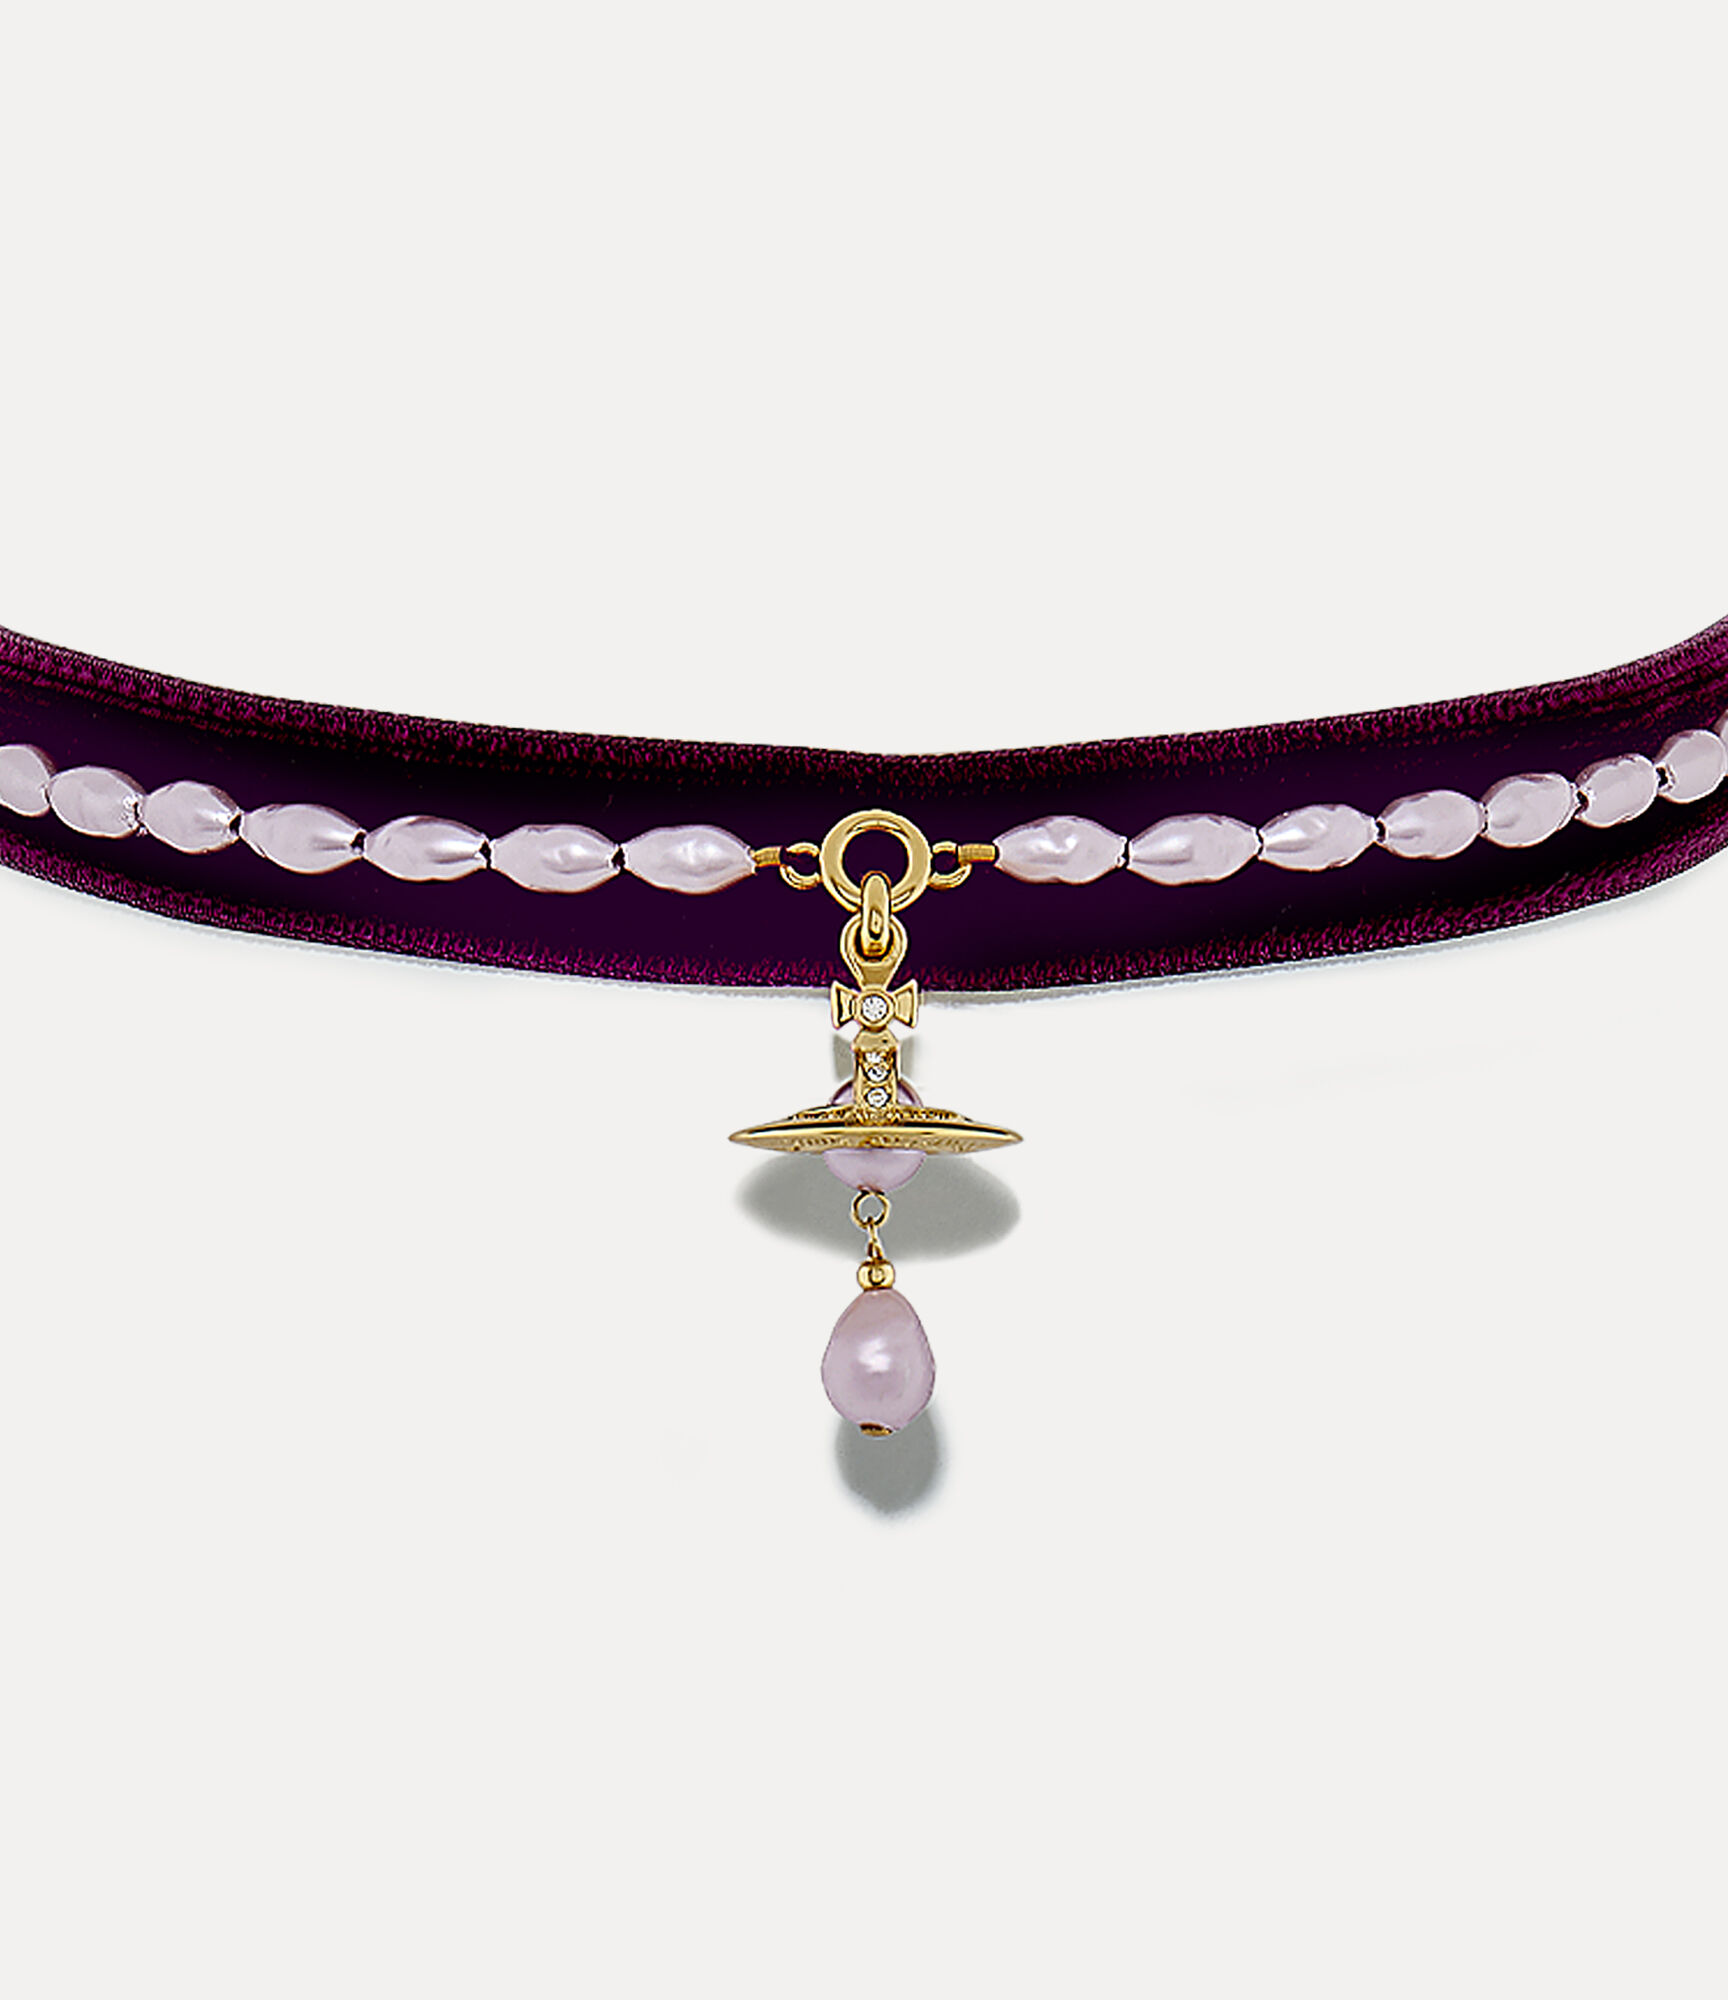 Vivienne Westwood Small Orb Necklace Pendant Purple Silver Color | eBay